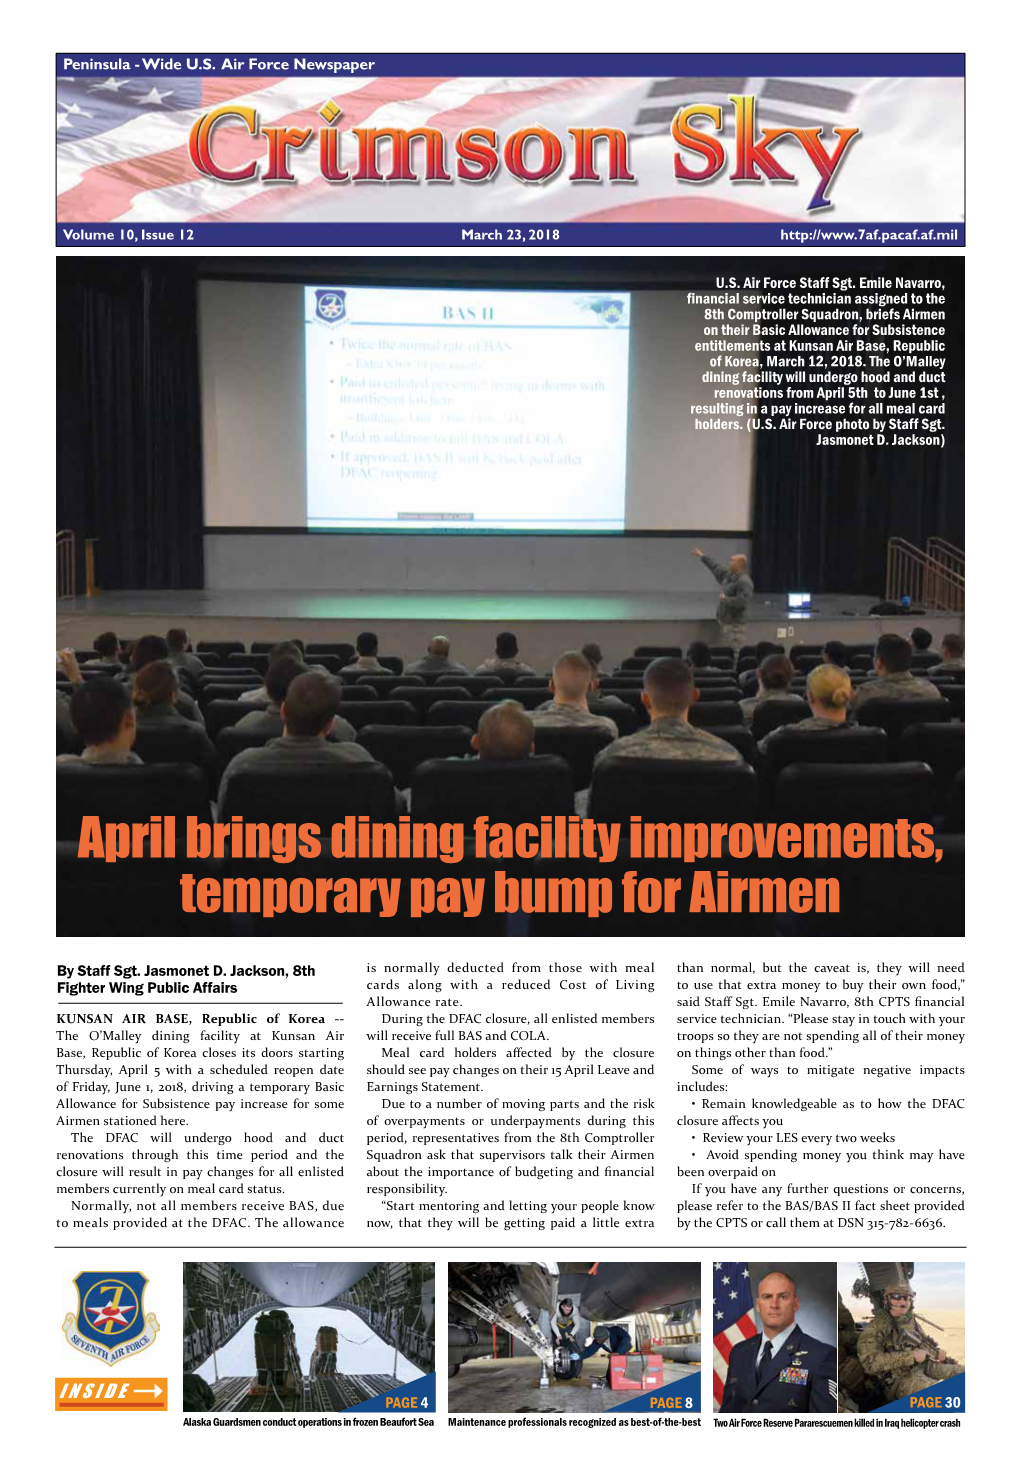 April Brings Dining Facility Improvements, Temporary Pay Bump for Airmen